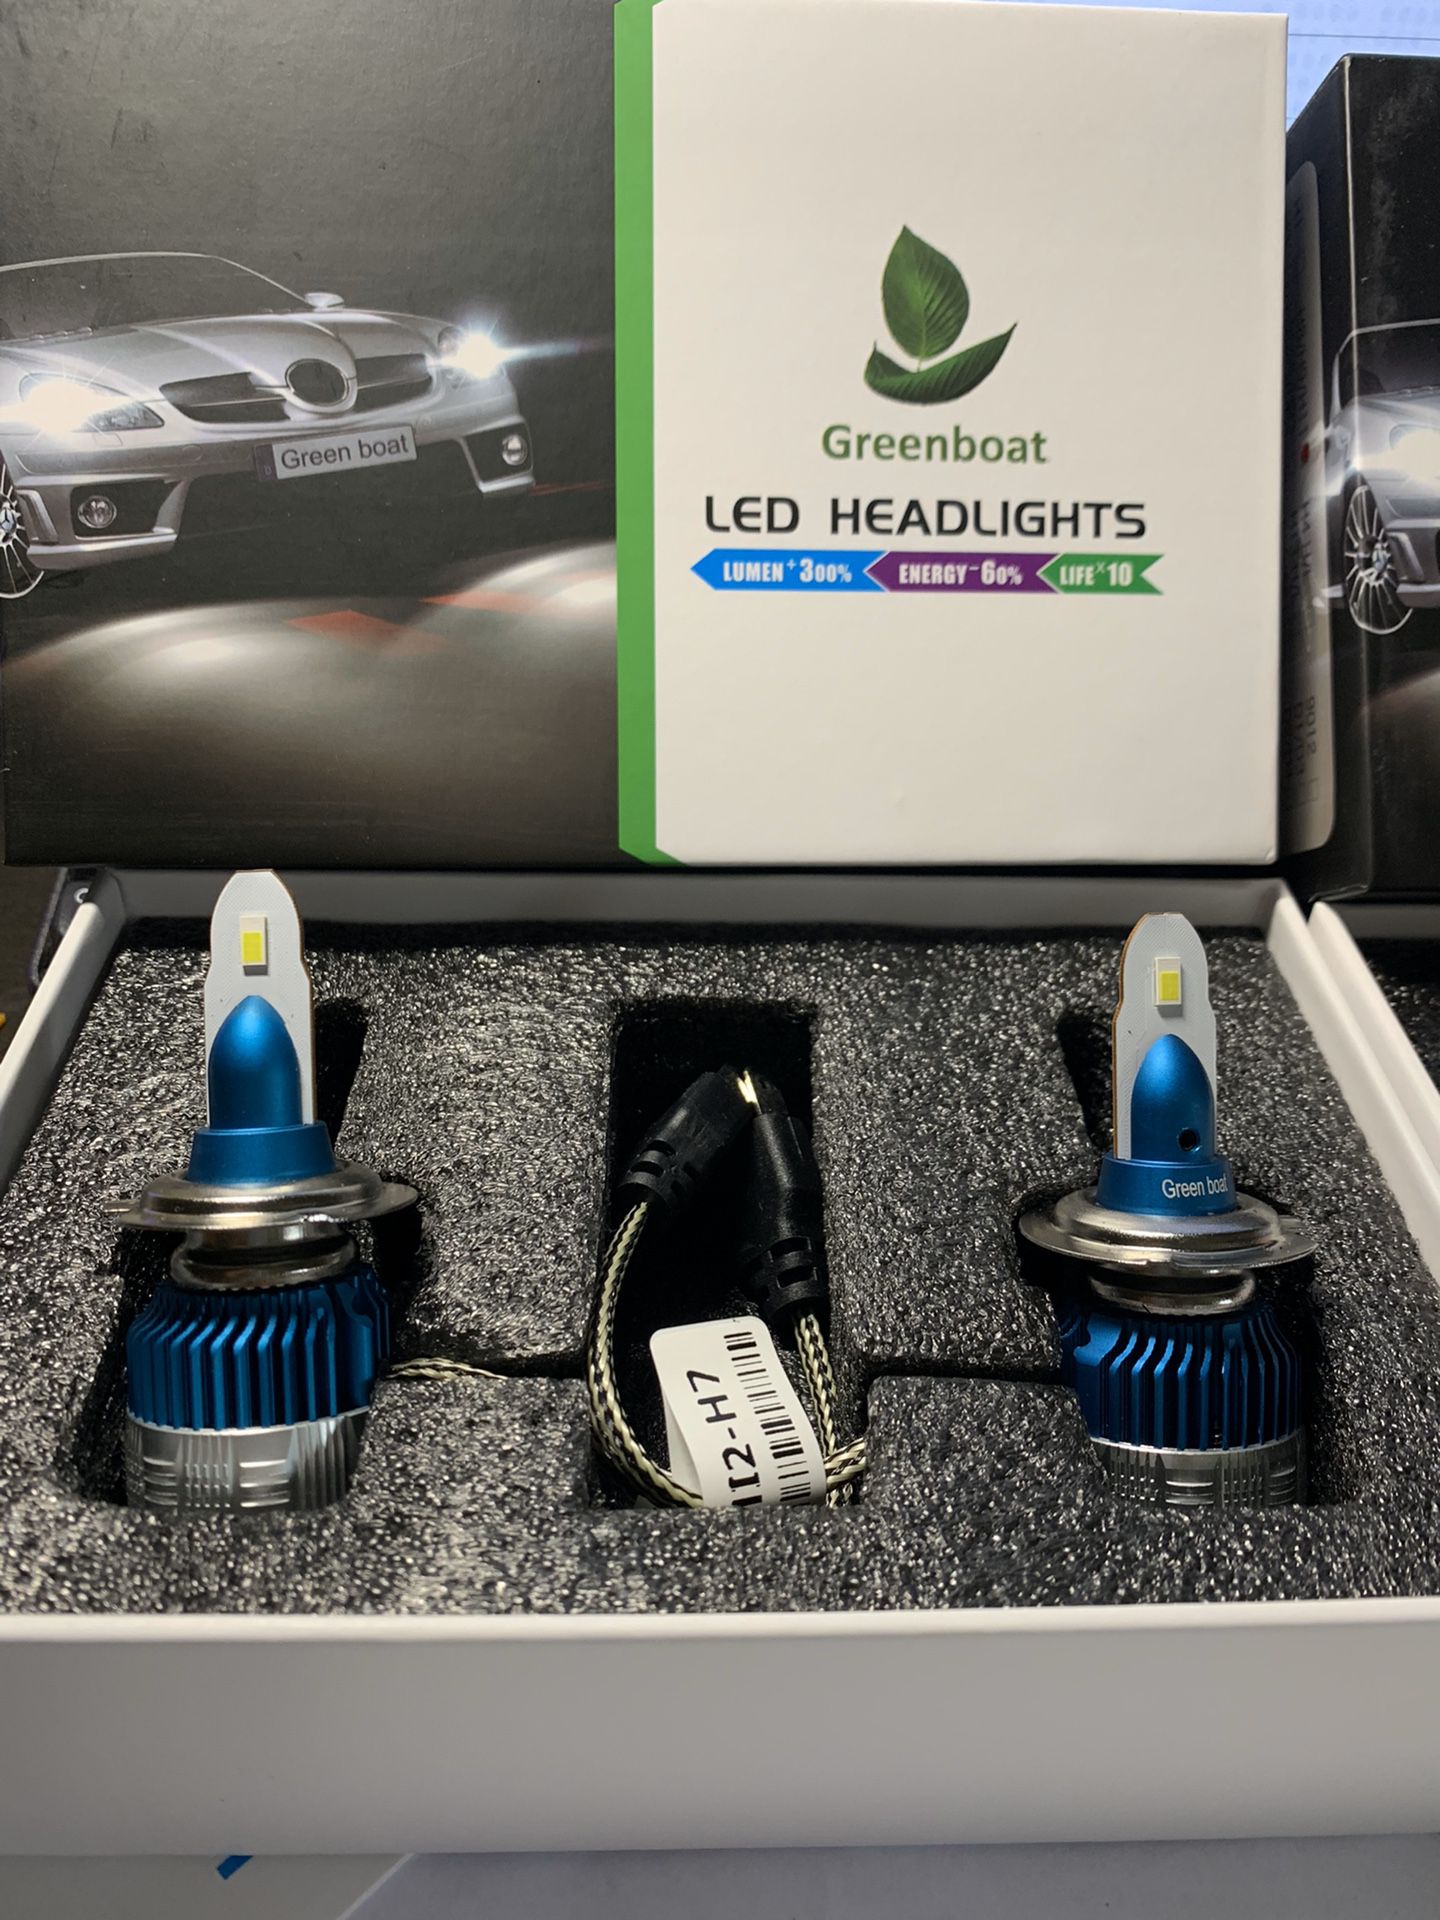 Upgraded the headlight of your car 🚘 Sedans trucks vans pick ups